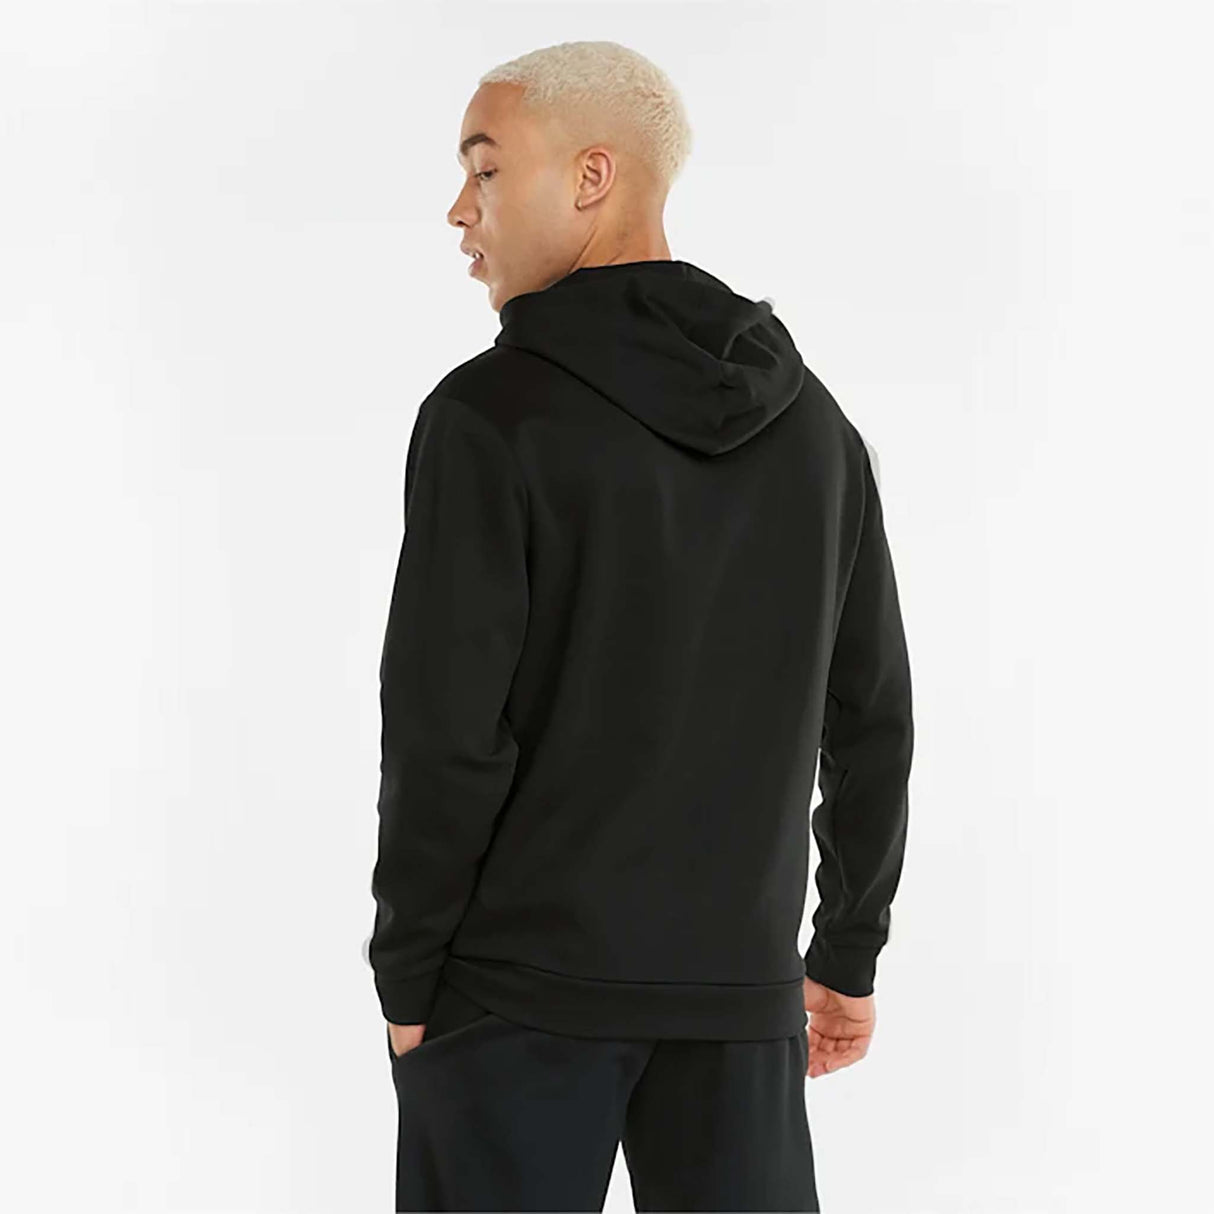 Puma RAD/CAL Half-Zip DK sweatshirt demi-zip noir pour homme dos